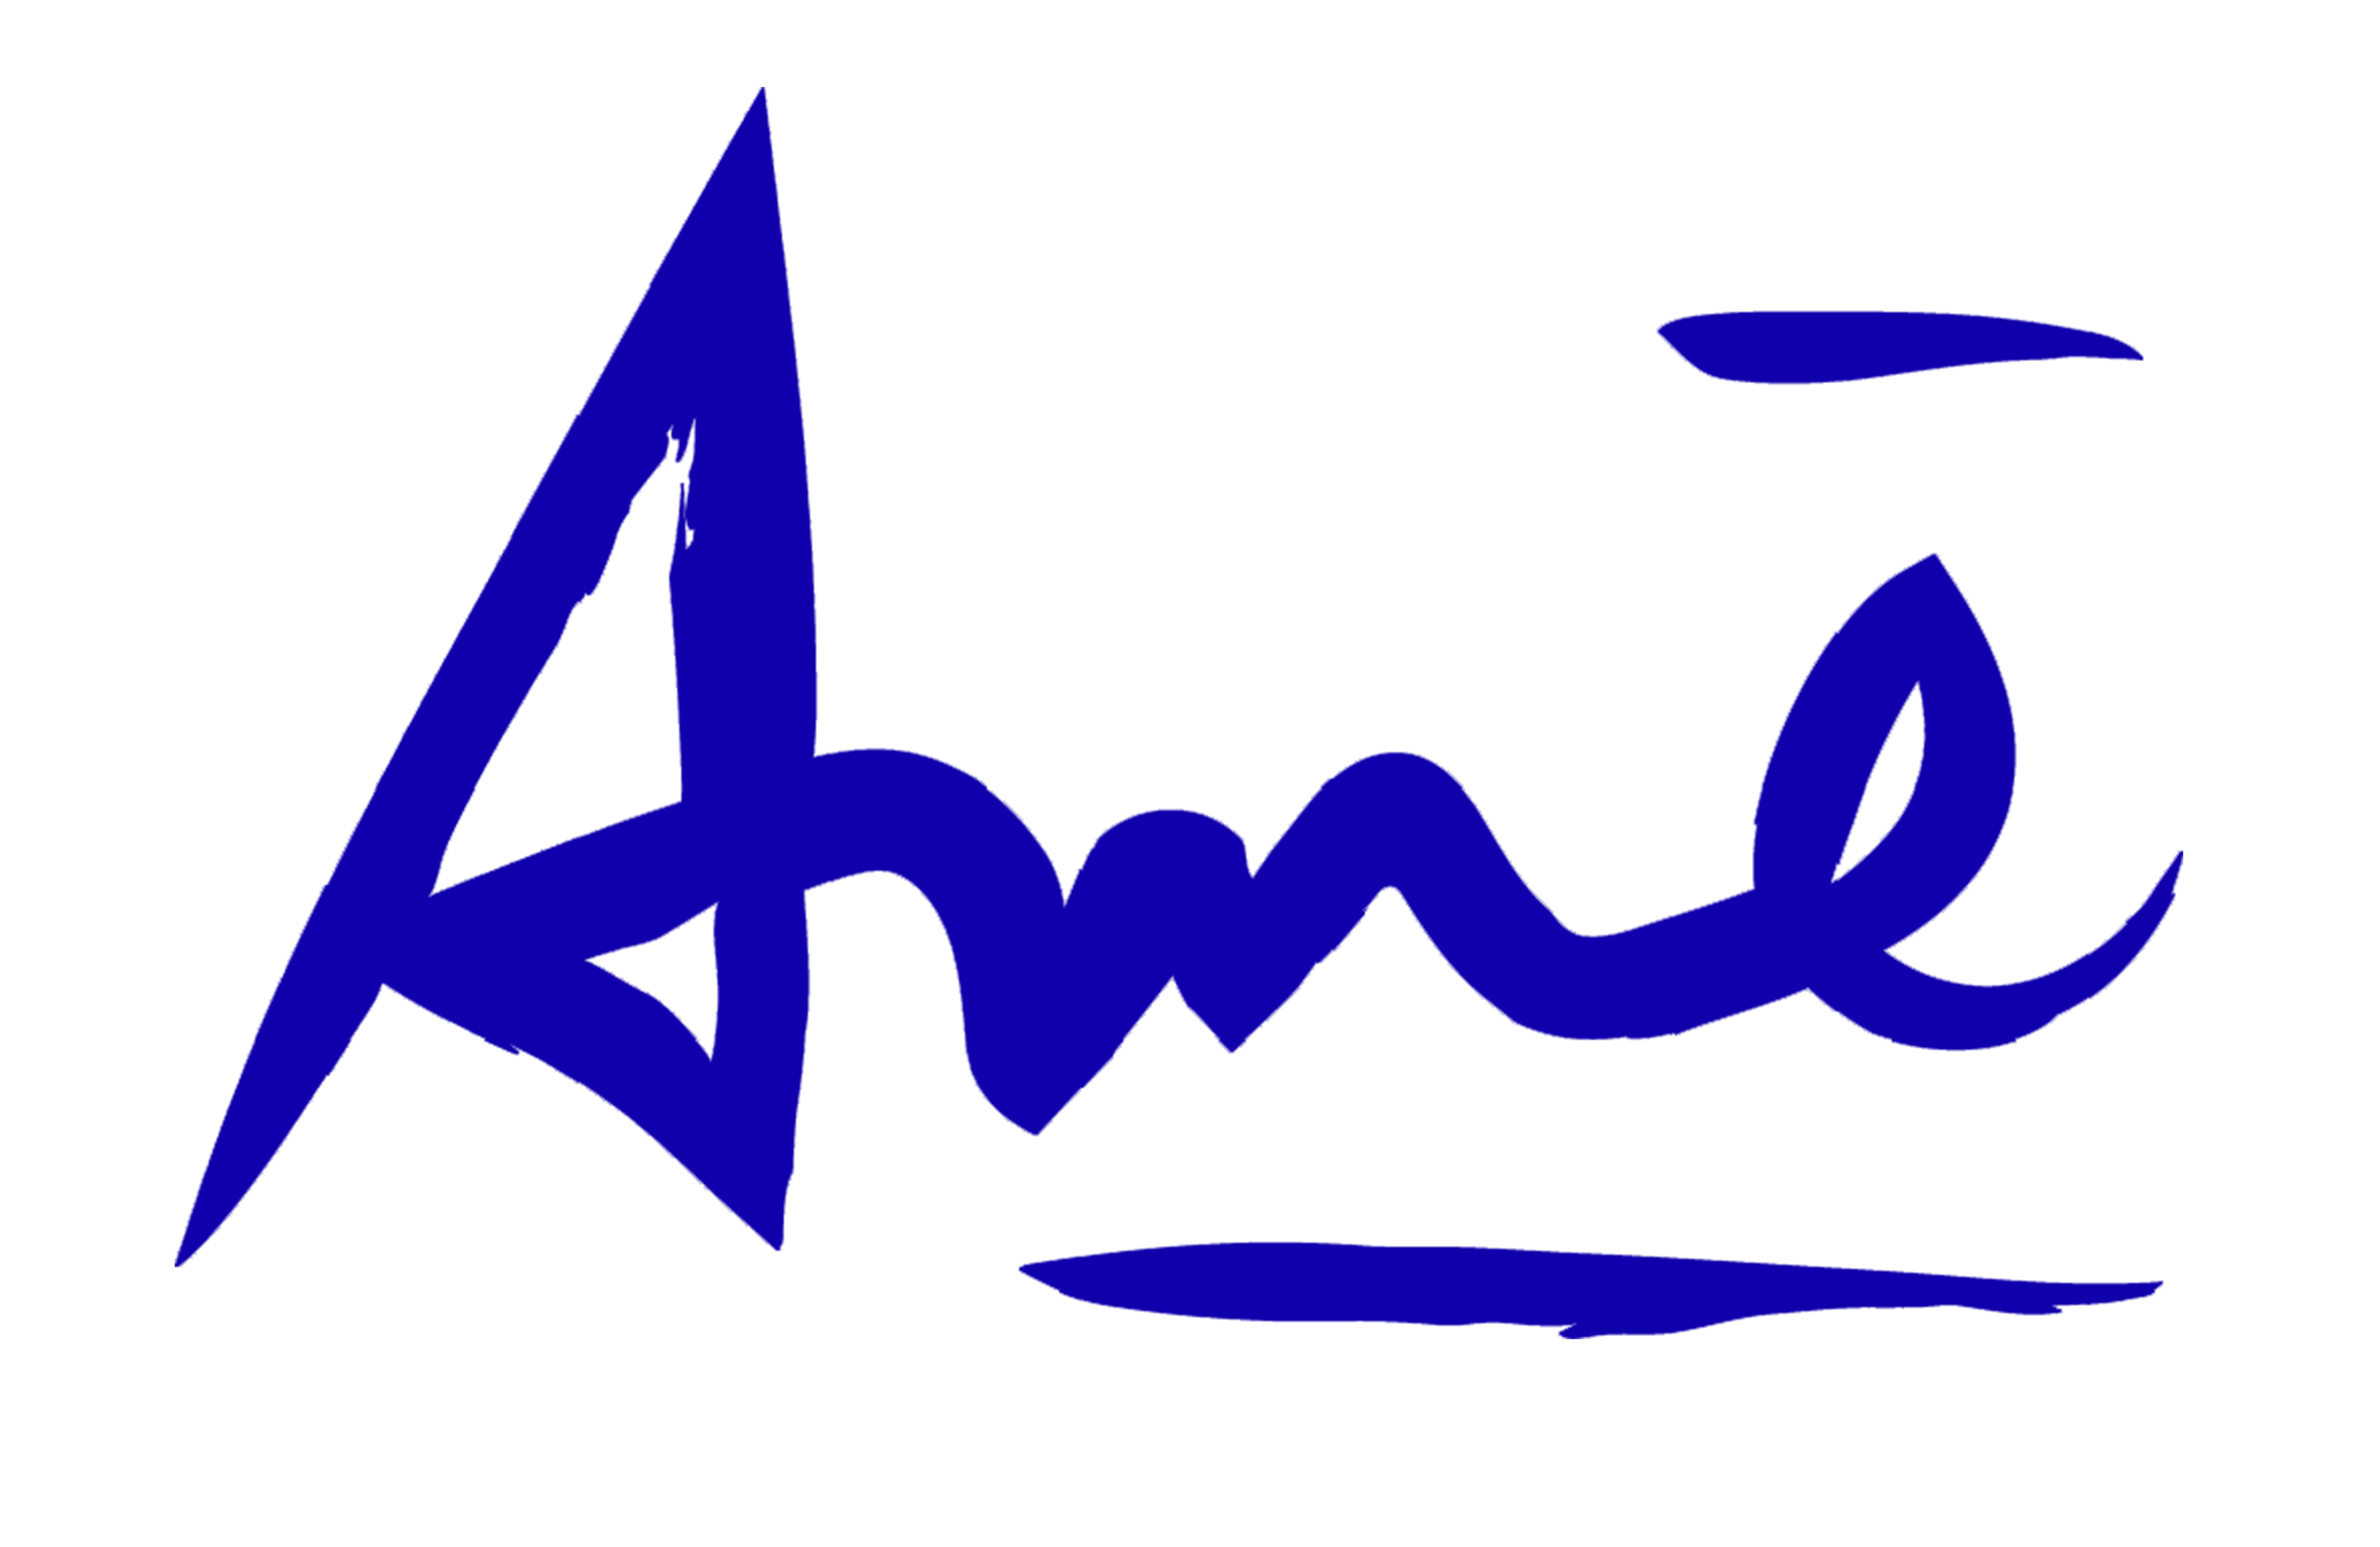 Amélie-Anne Calmo